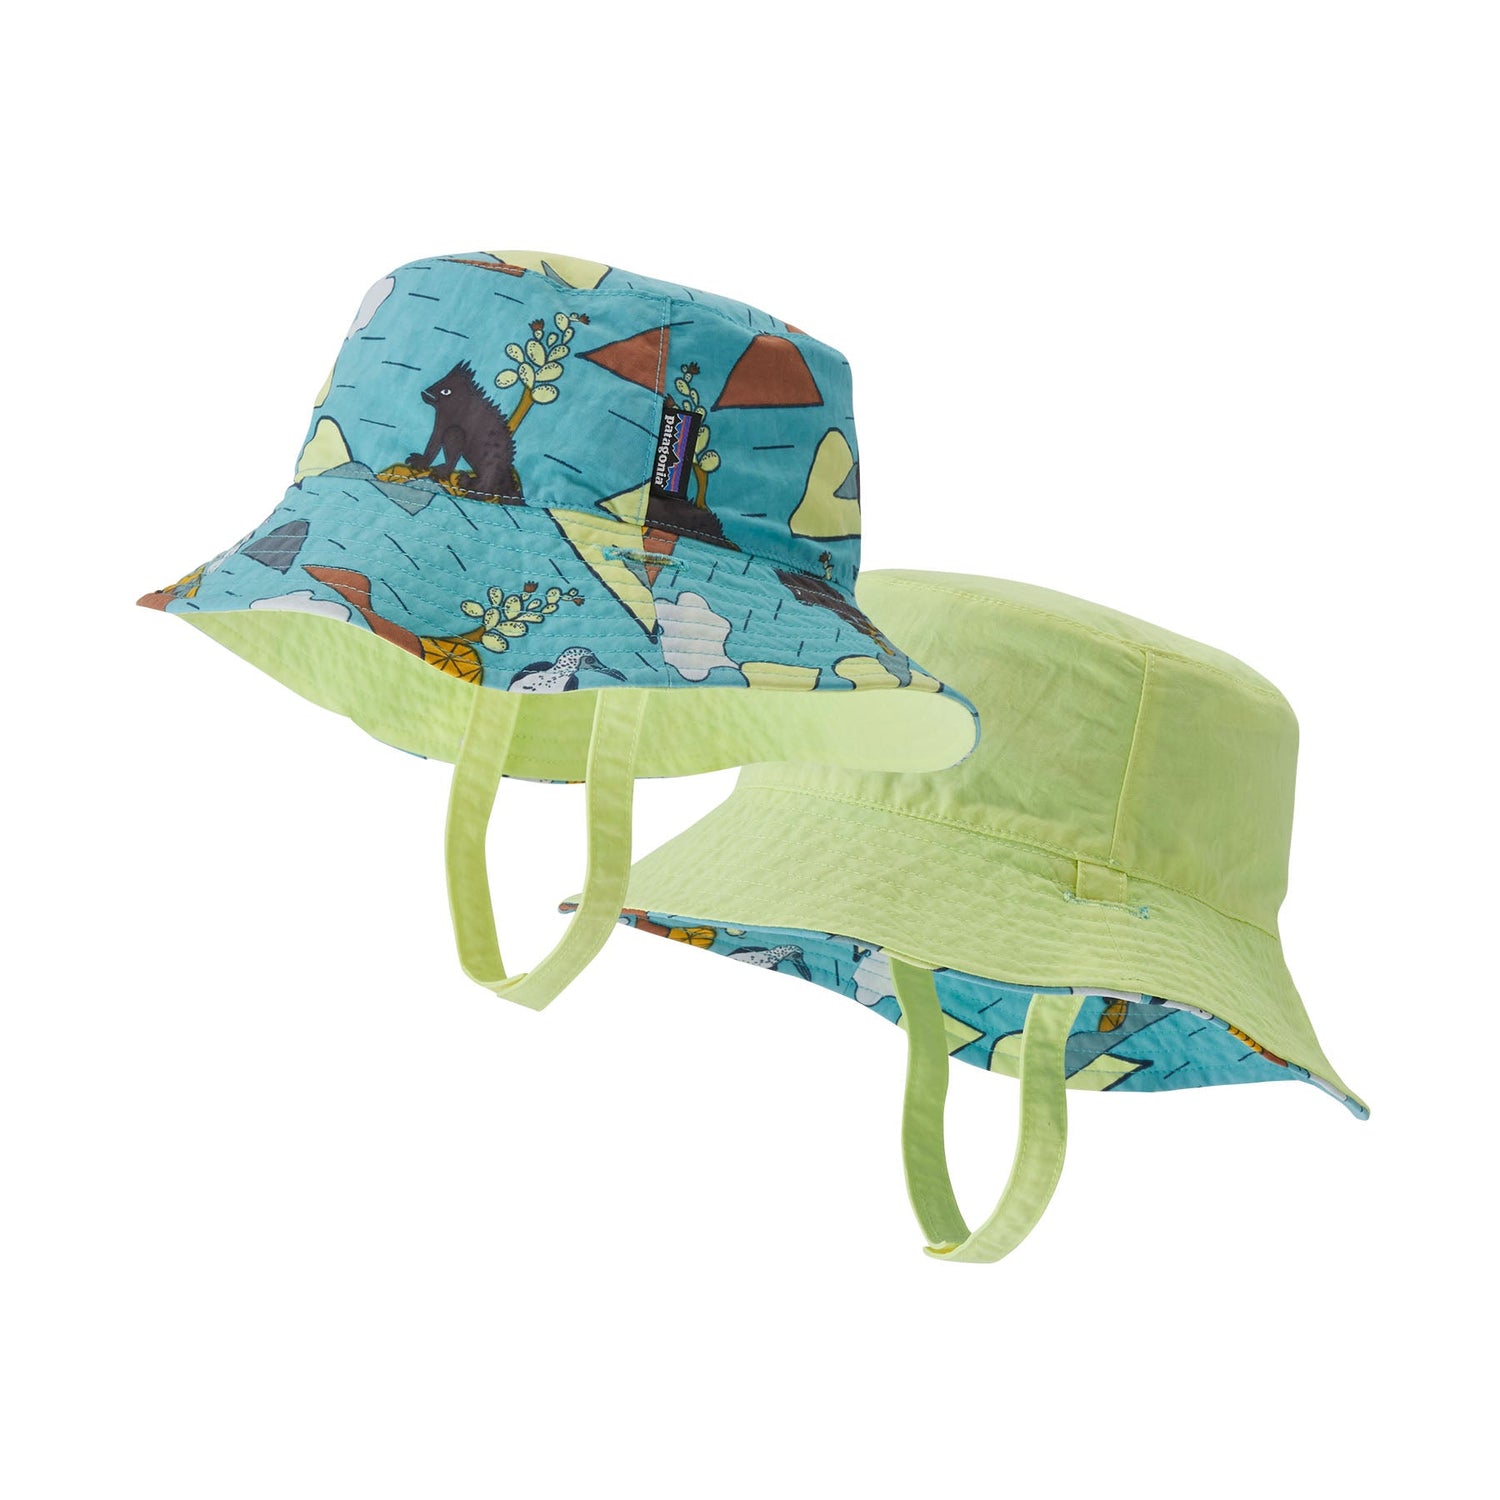 Patagonia - Kids Sun Bucket Hat - 100% recycled nylon - Weekendbee - sustainable sportswear